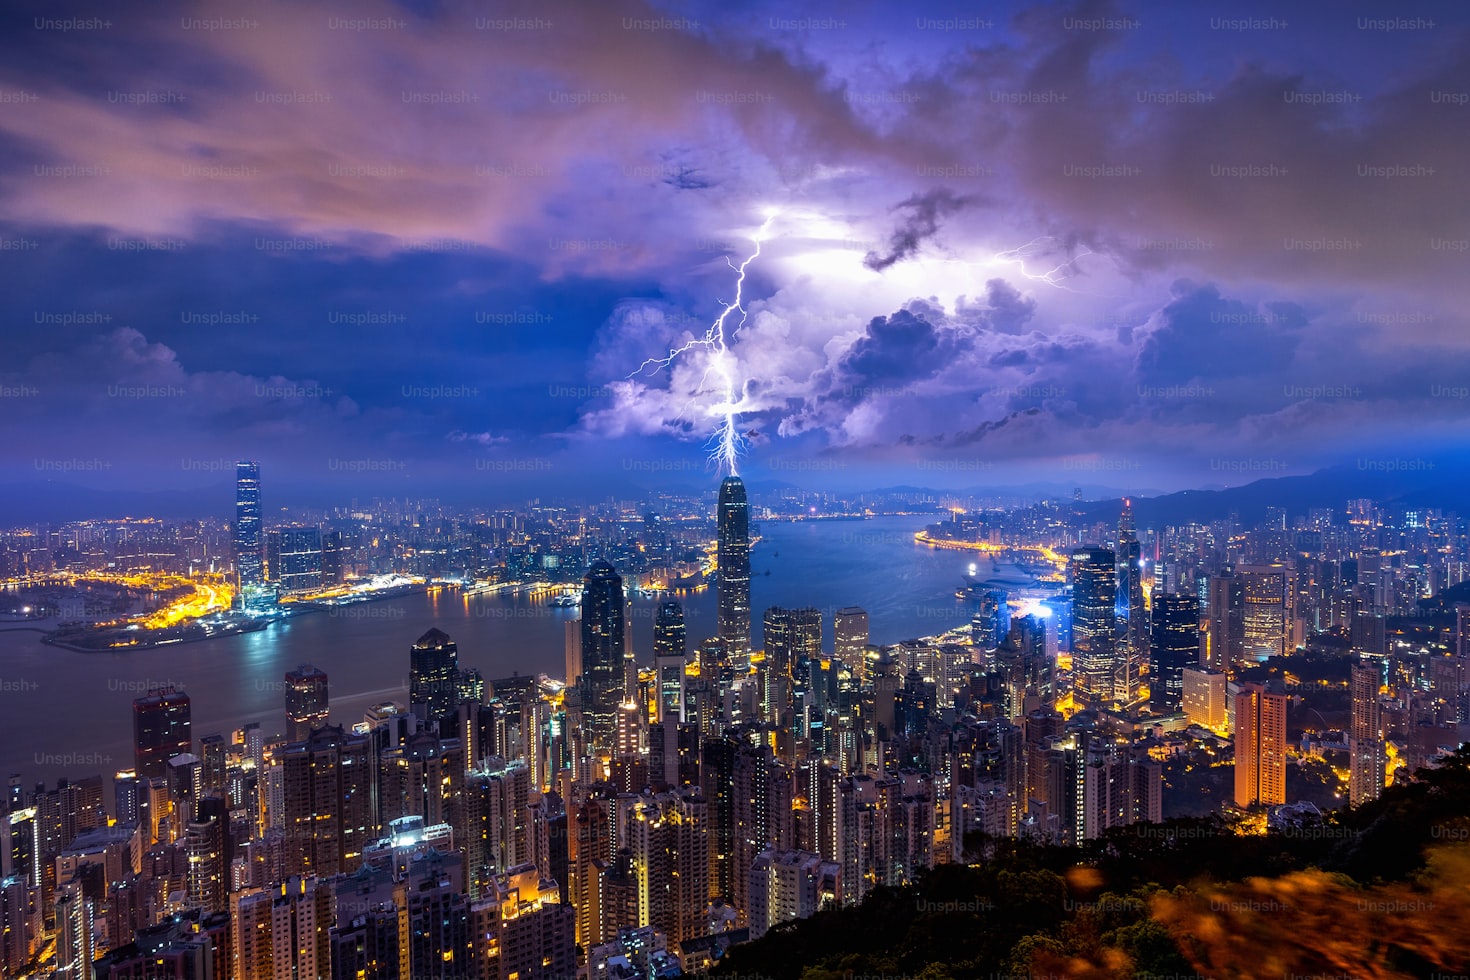 lightning strikes hitting a building